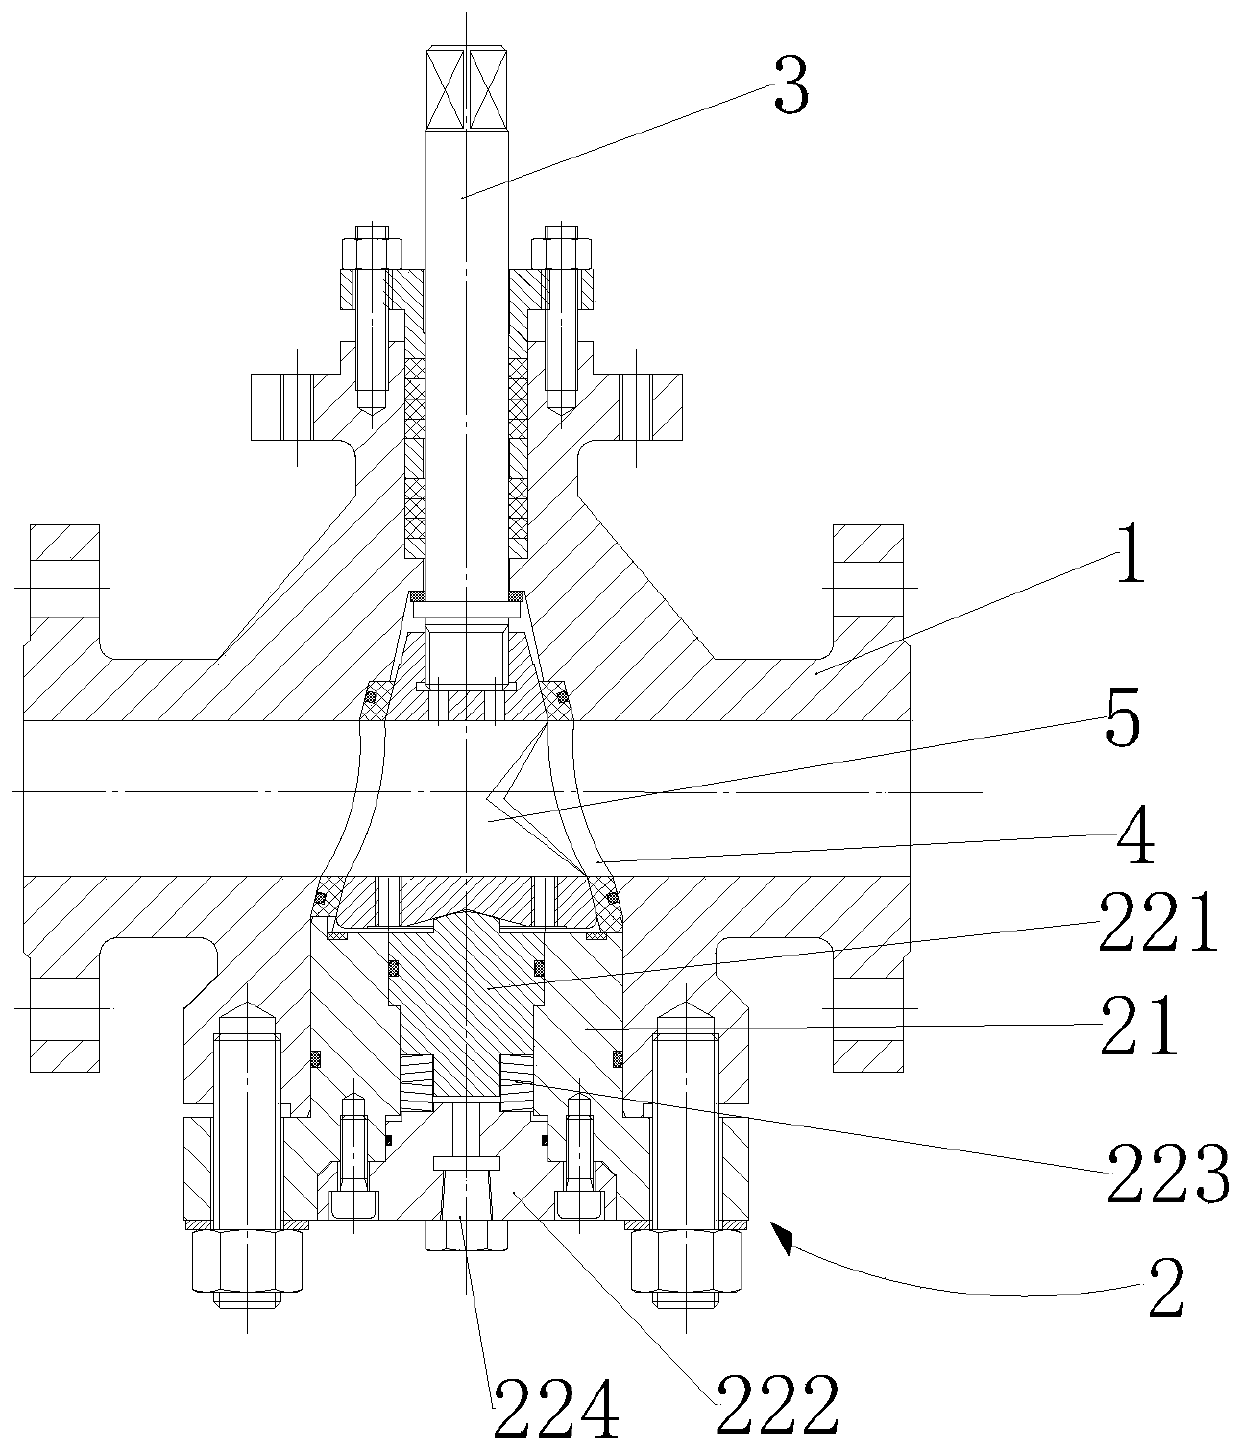 Cock regulating valve with high adjustable ratio